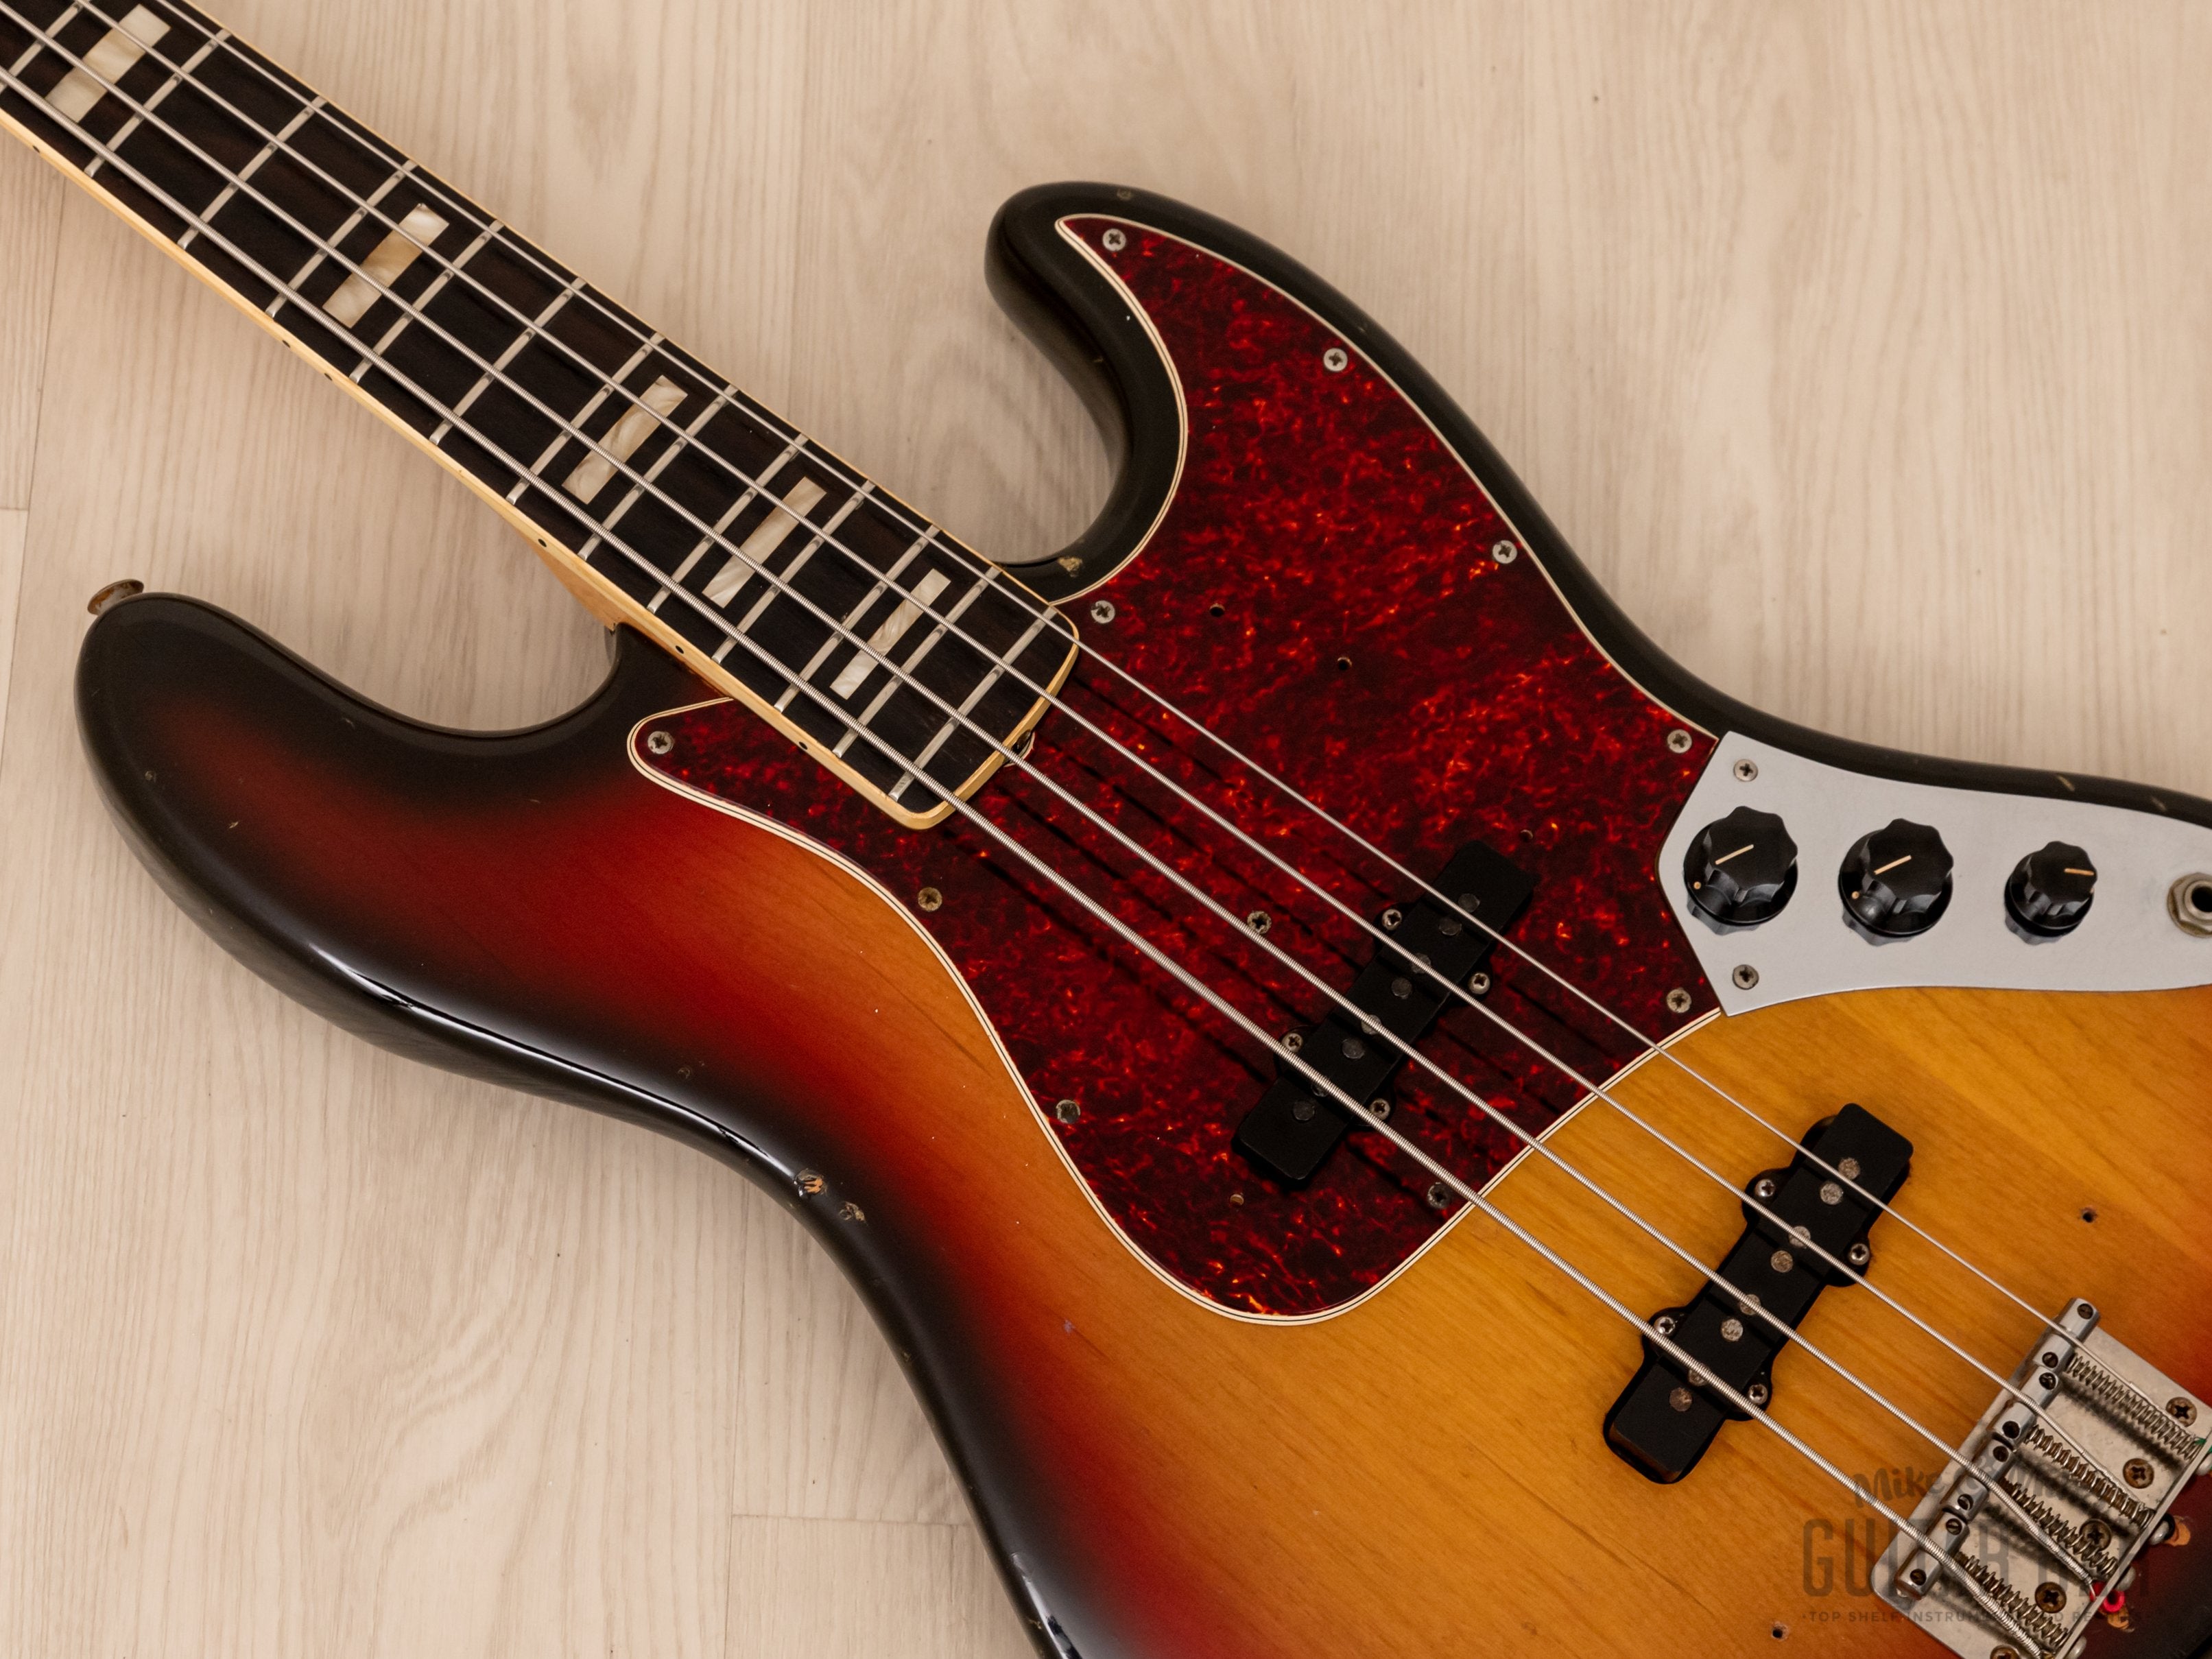 1972 Fender Jazz Bass Vintage Bass Guitar Sunburst w/ Flame Maple Neck, Case